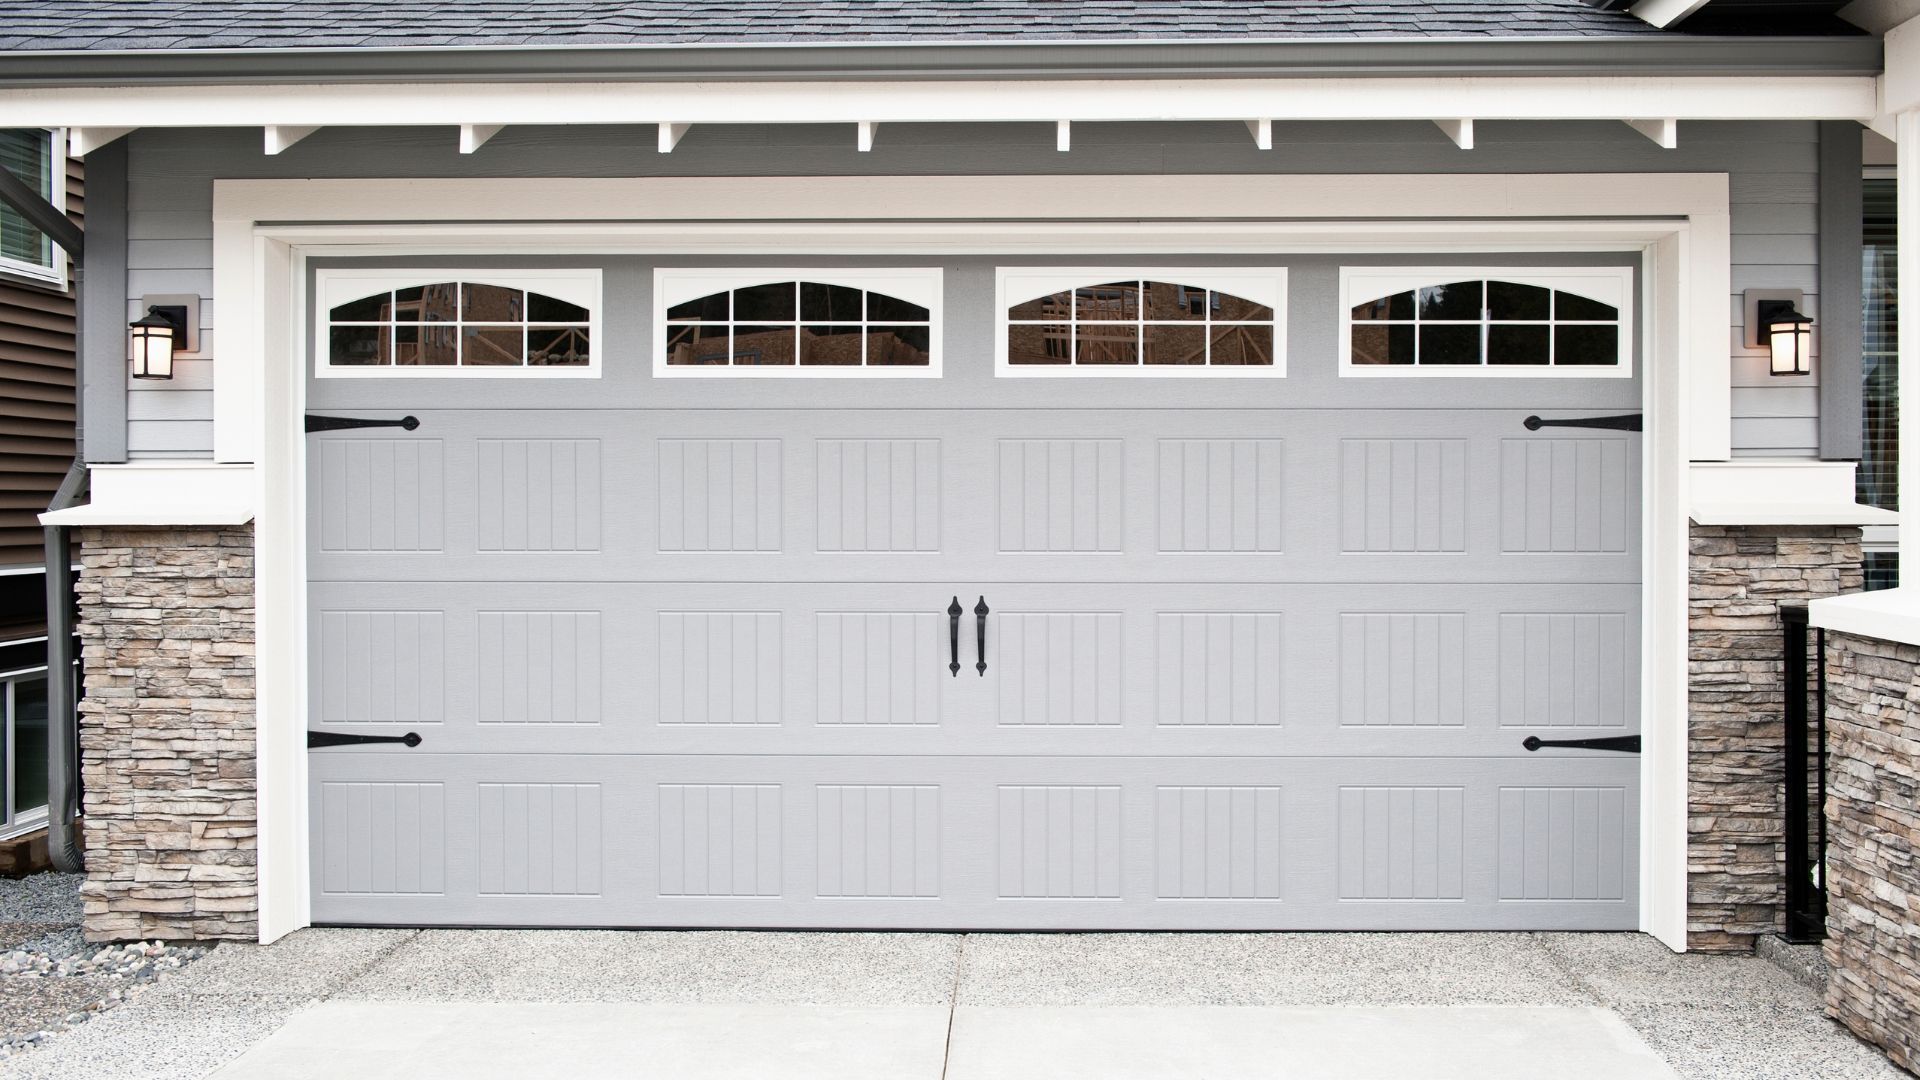 Newly installed garage door